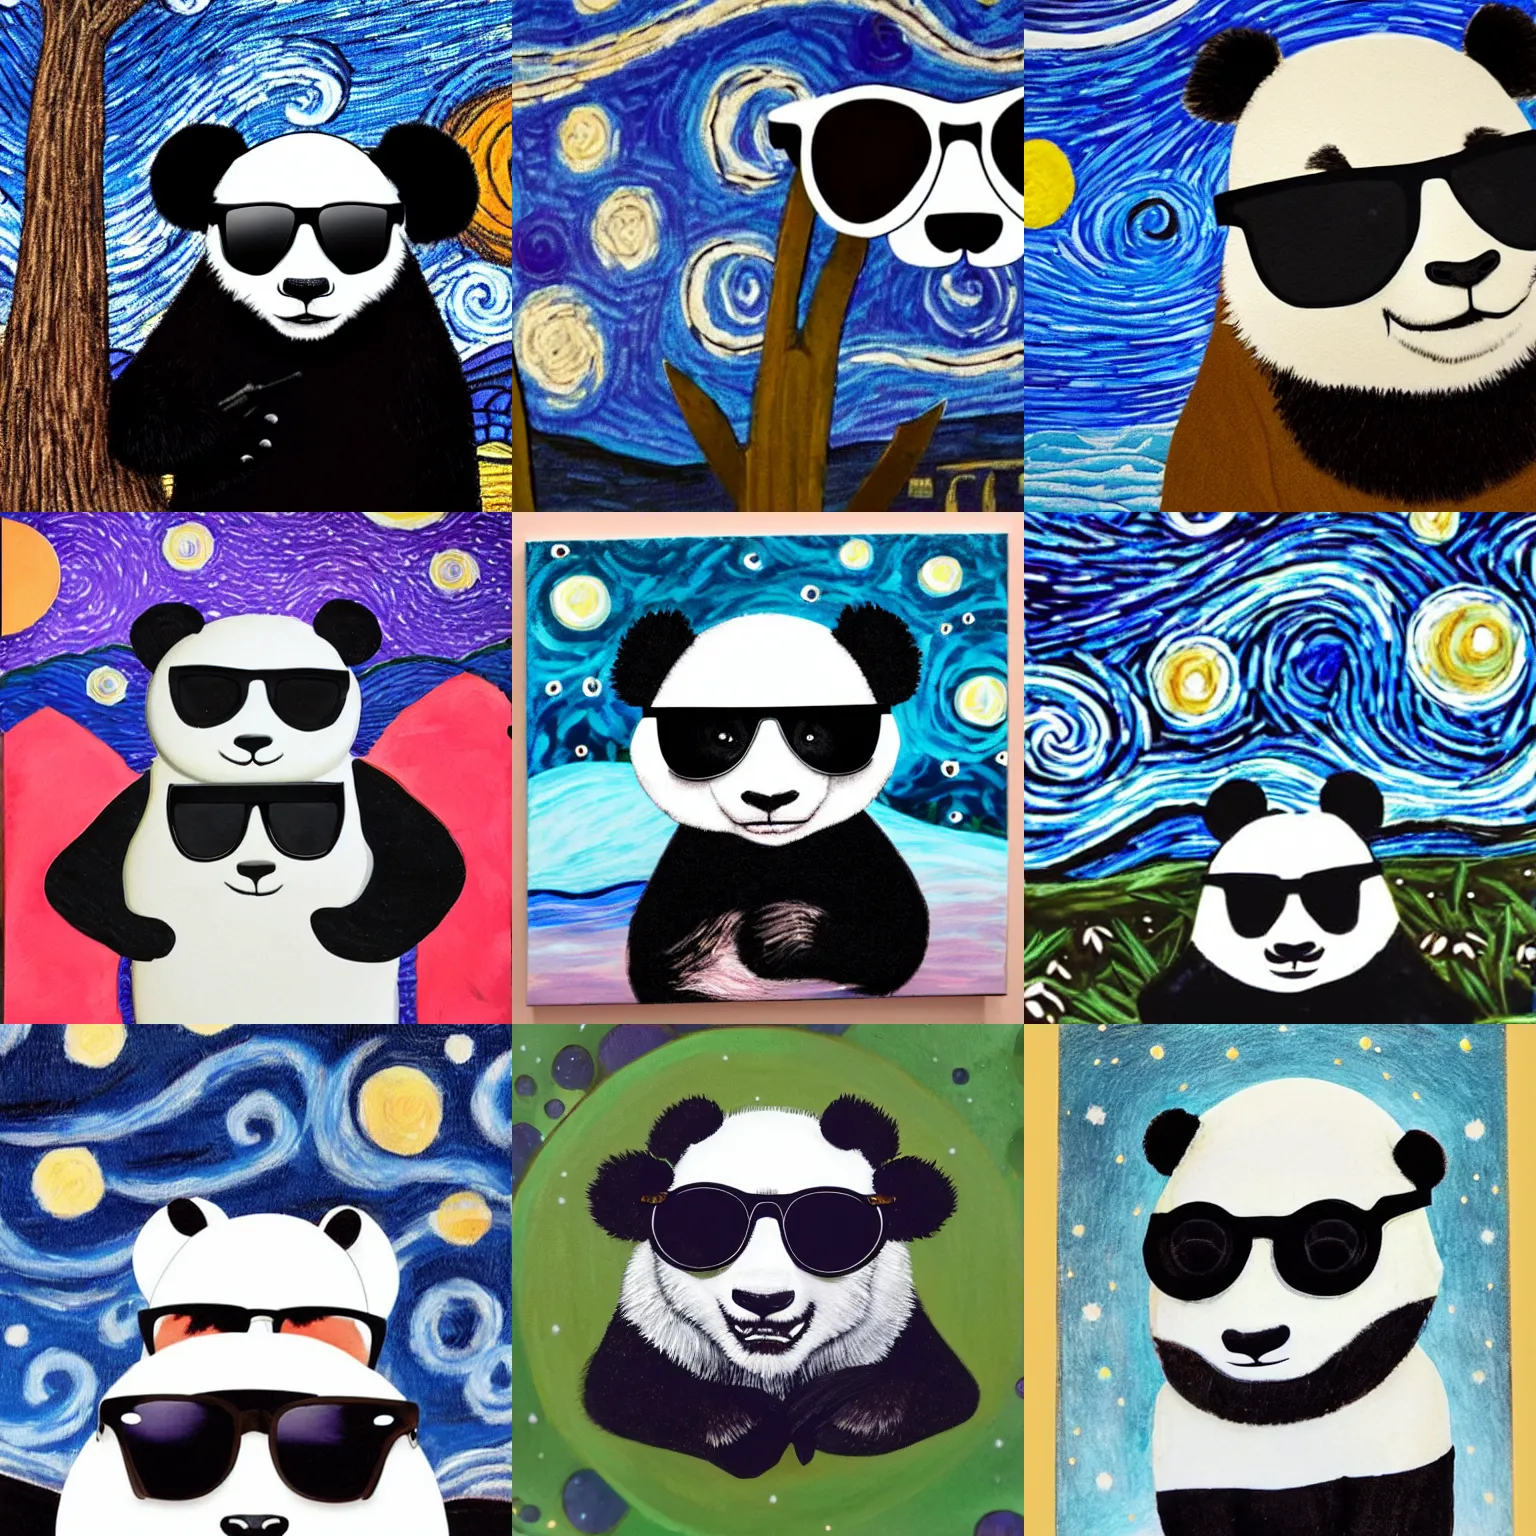 Prompt: A panda wearing sunglasses on a starry night